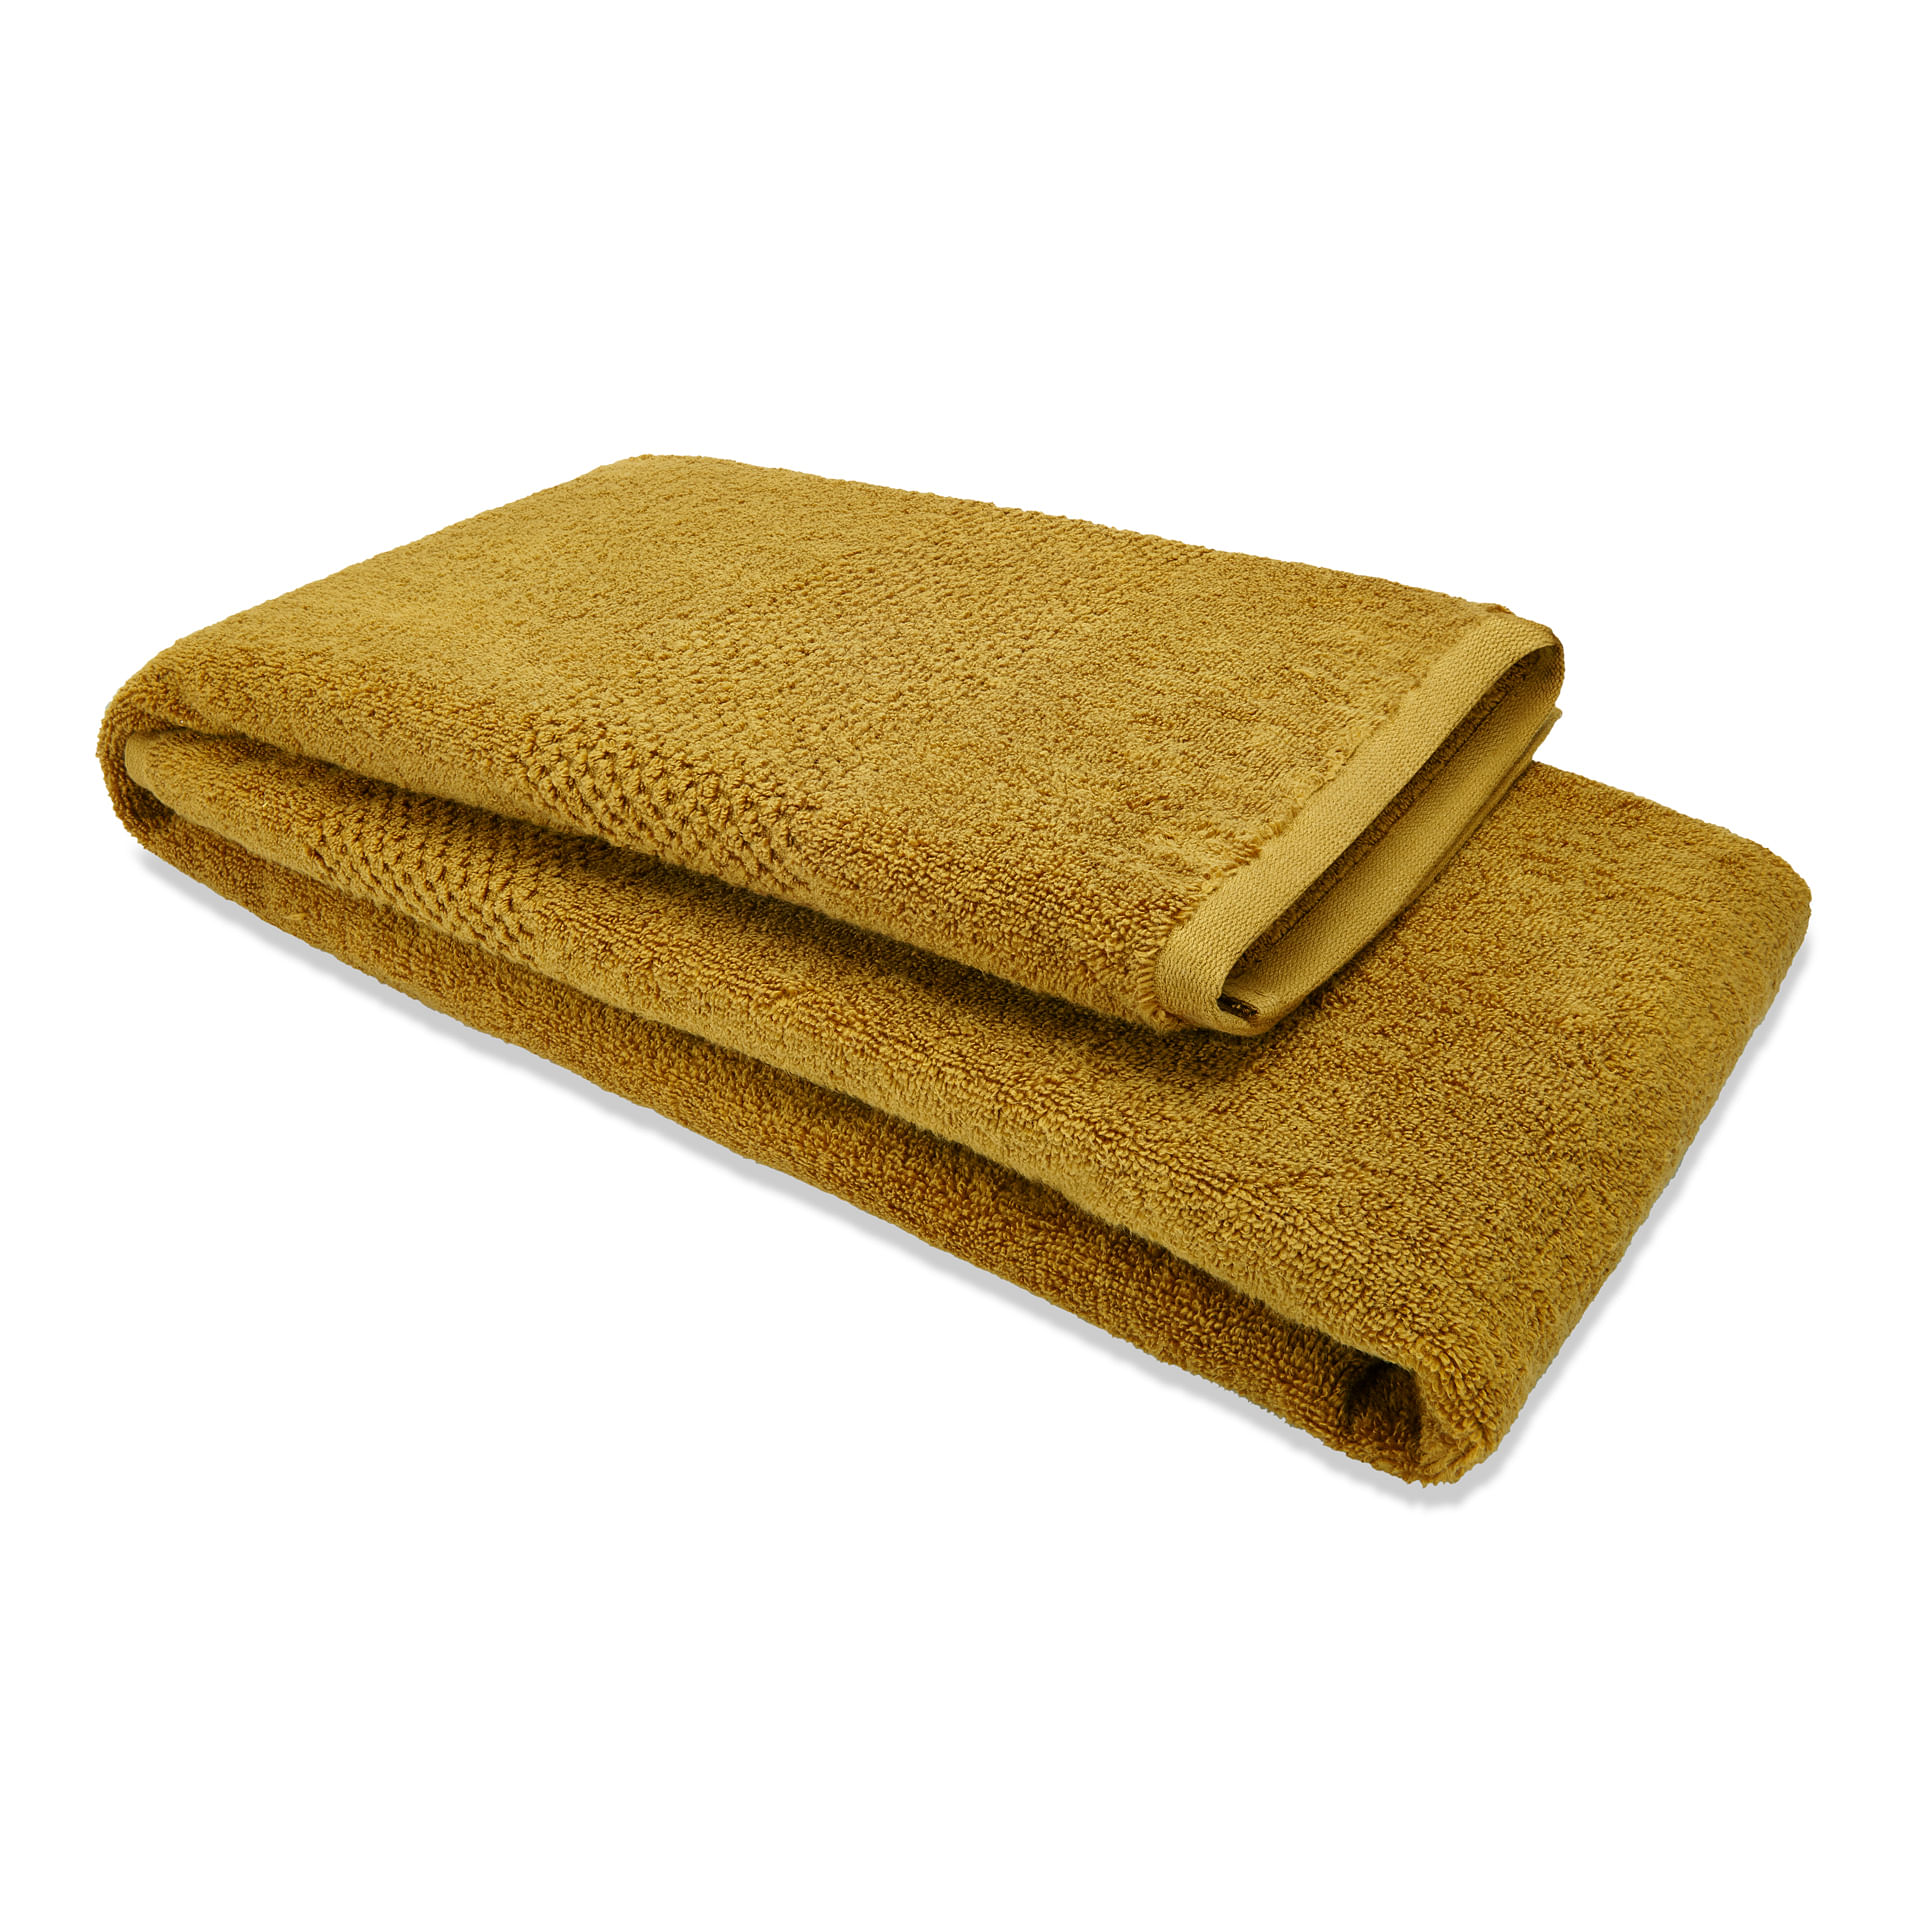 Swift Dry Cotton Bath Towel 76X150 Cm 450 Gsm in Golden Brown Colour